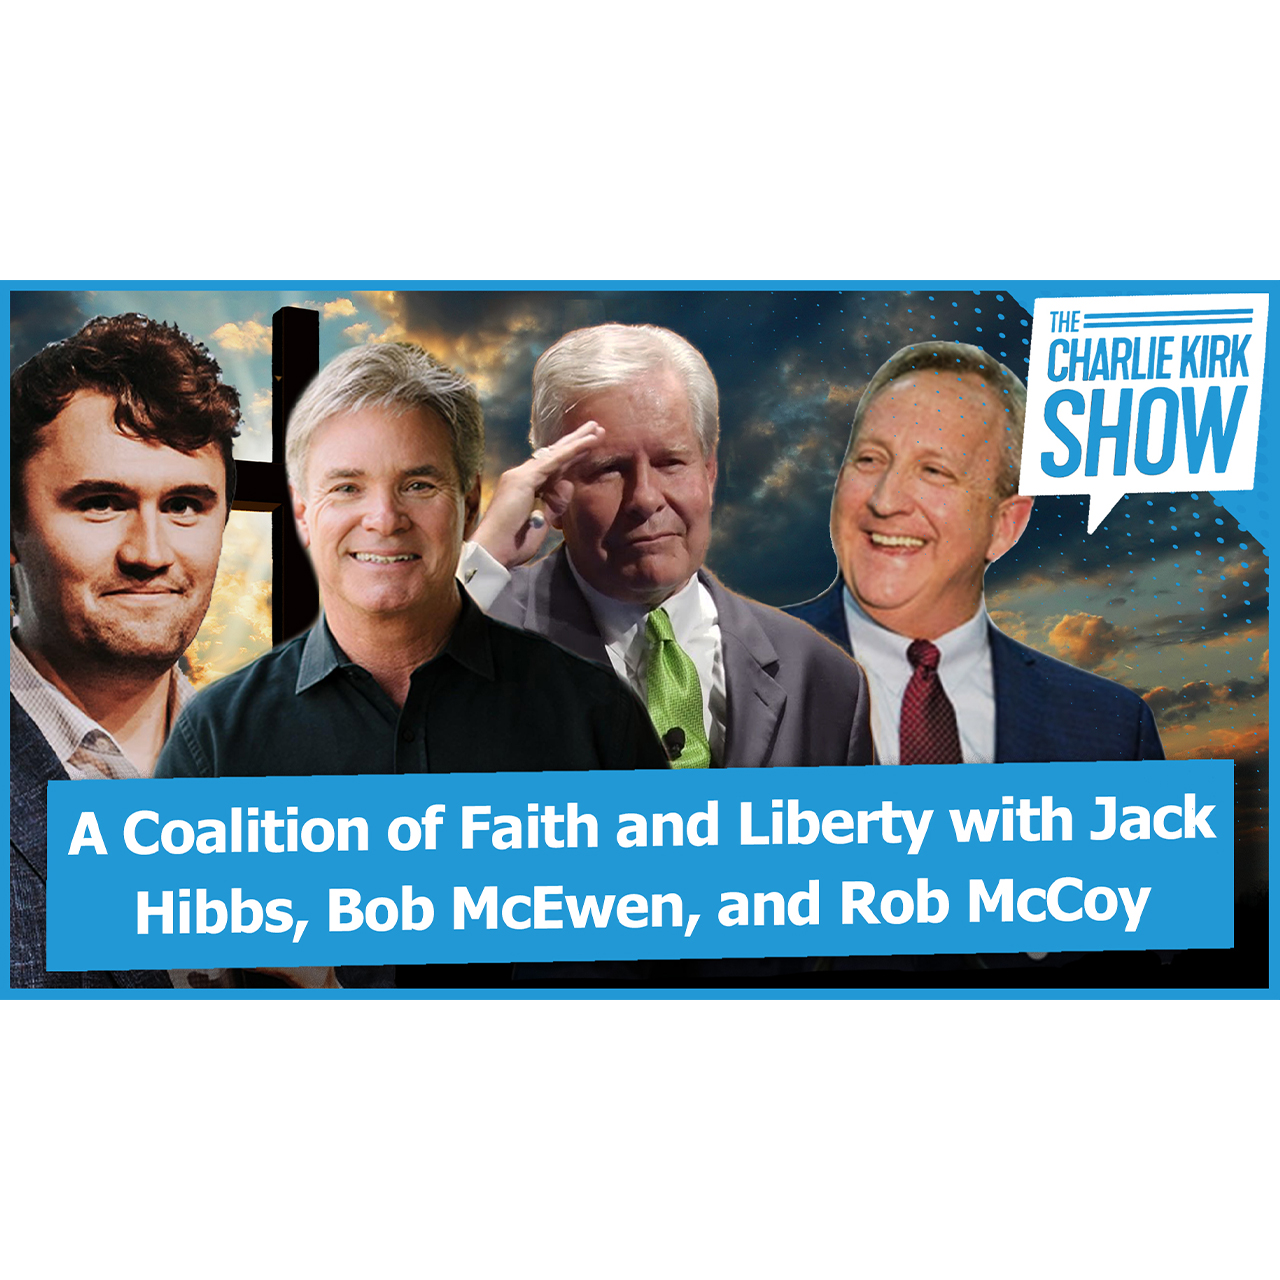 A Coalition of Faith and Liberty with Jack Hibbs, Bob McEwen, and Rob McCoy